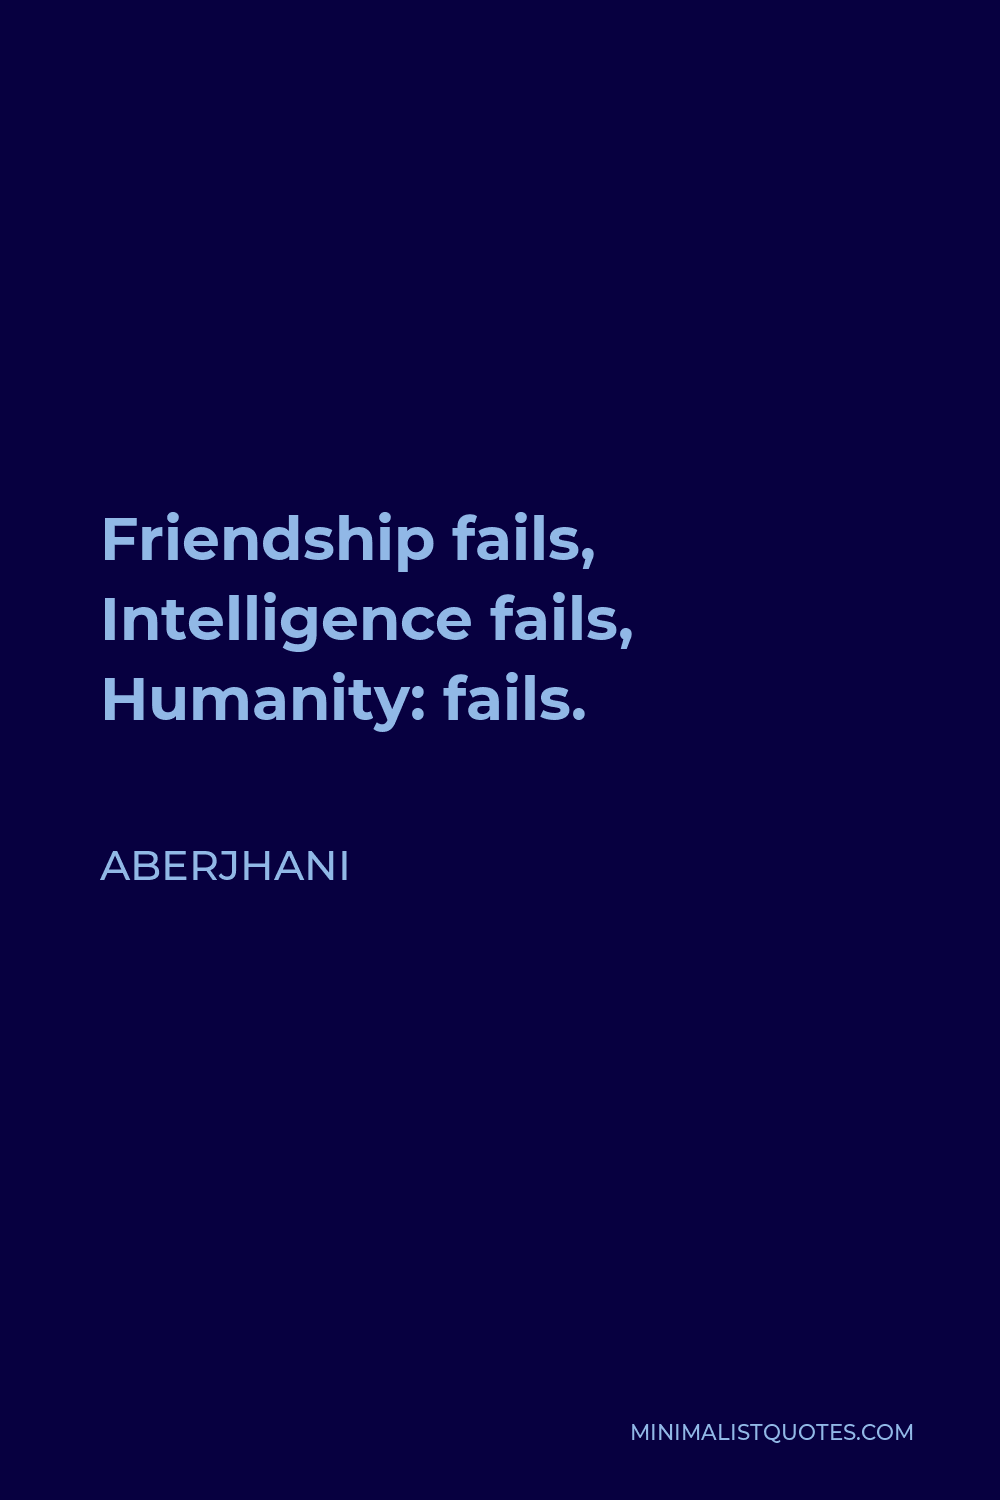 Aberjhani Quote - Friendship fails, Intelligence fails, Humanity: fails.